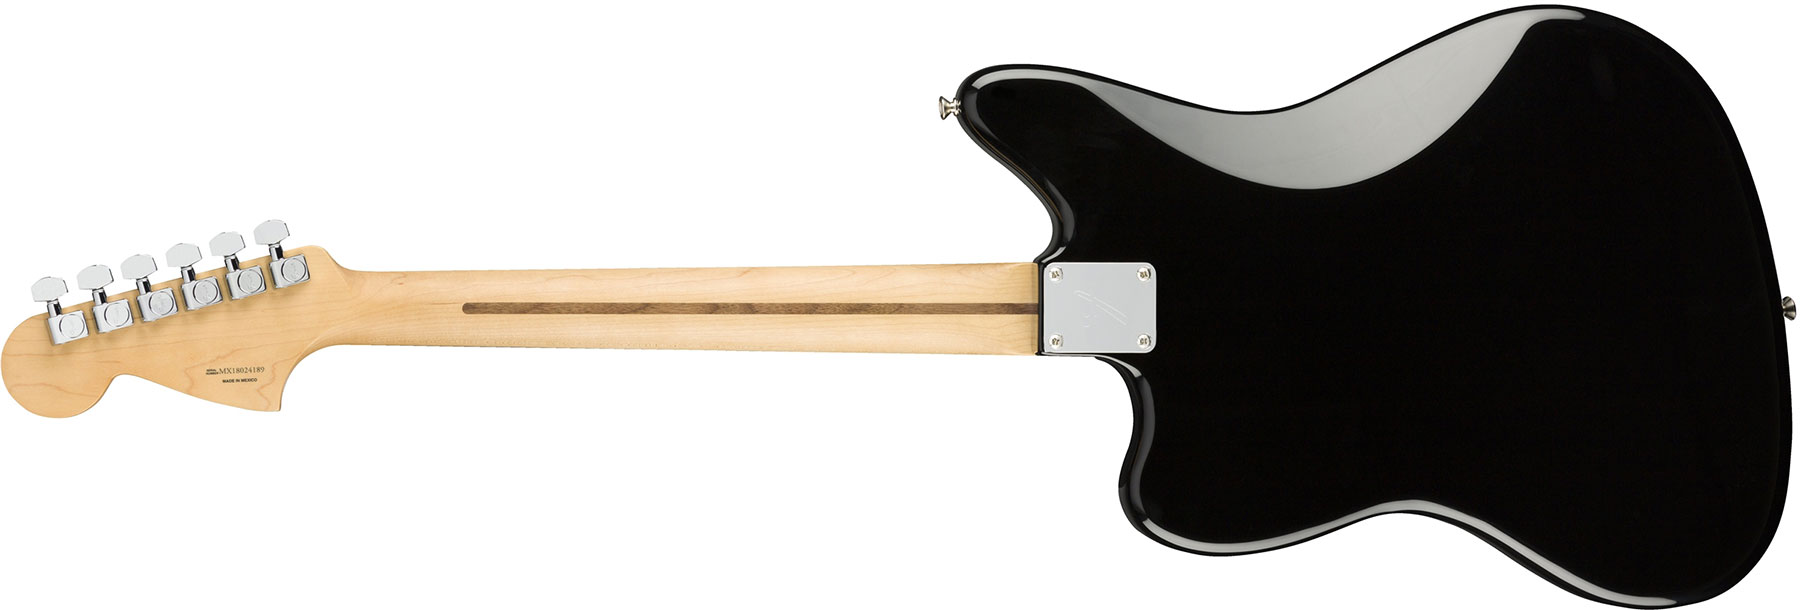 Fender Jaguar Player Mex Hs Pf - Black - Guitarra electrica retro rock - Variation 1